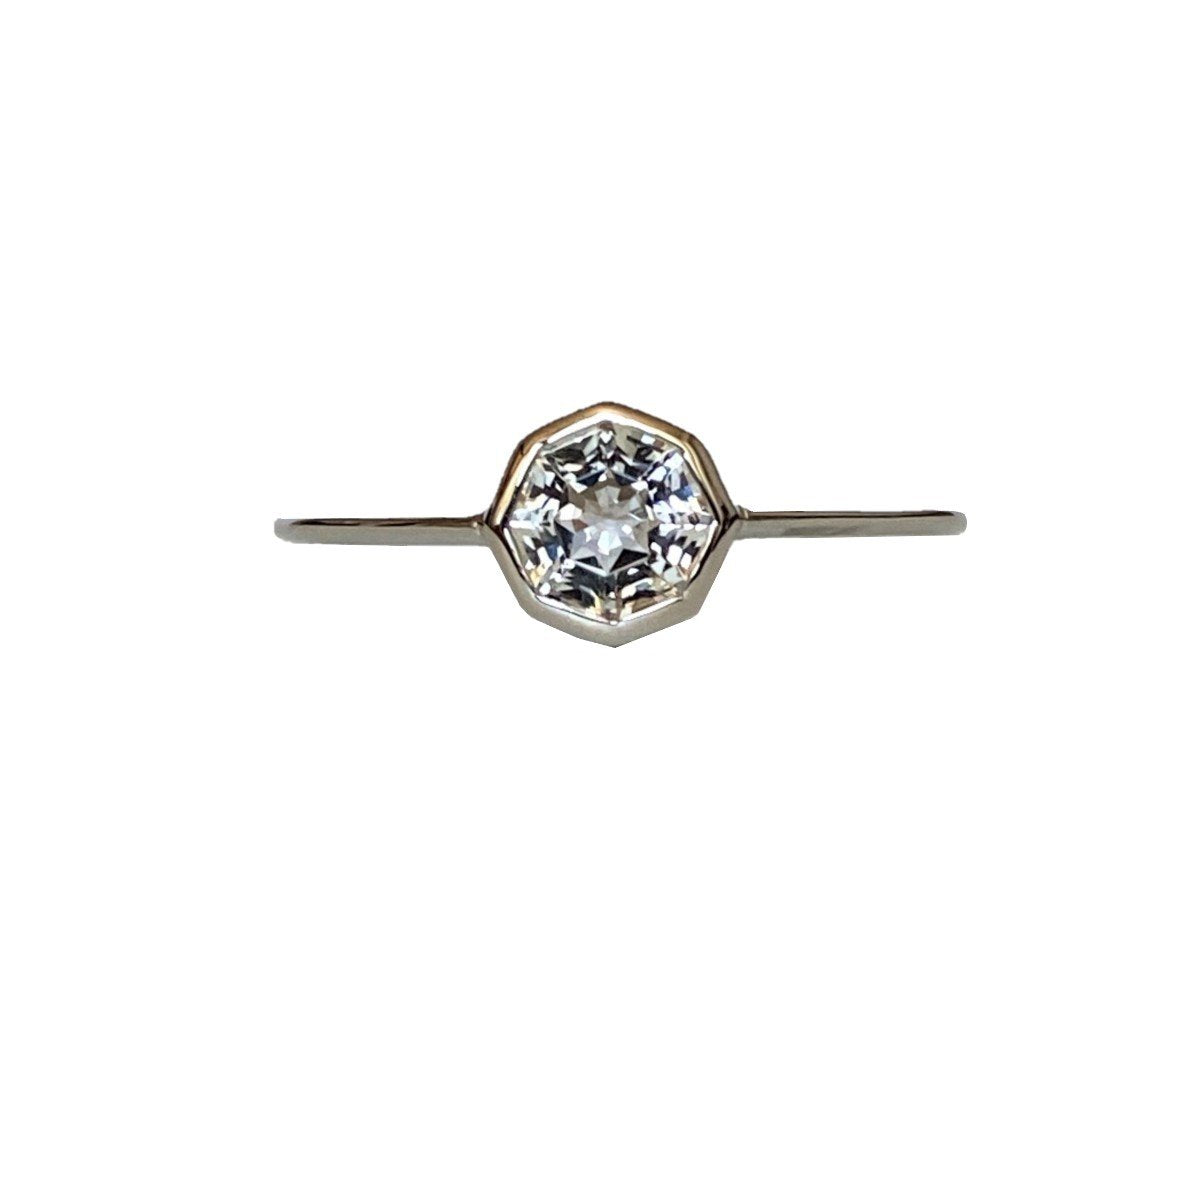 FARA Bezel Set White Topaz Engagement / Promise / Stackable Ring Sterling Silver